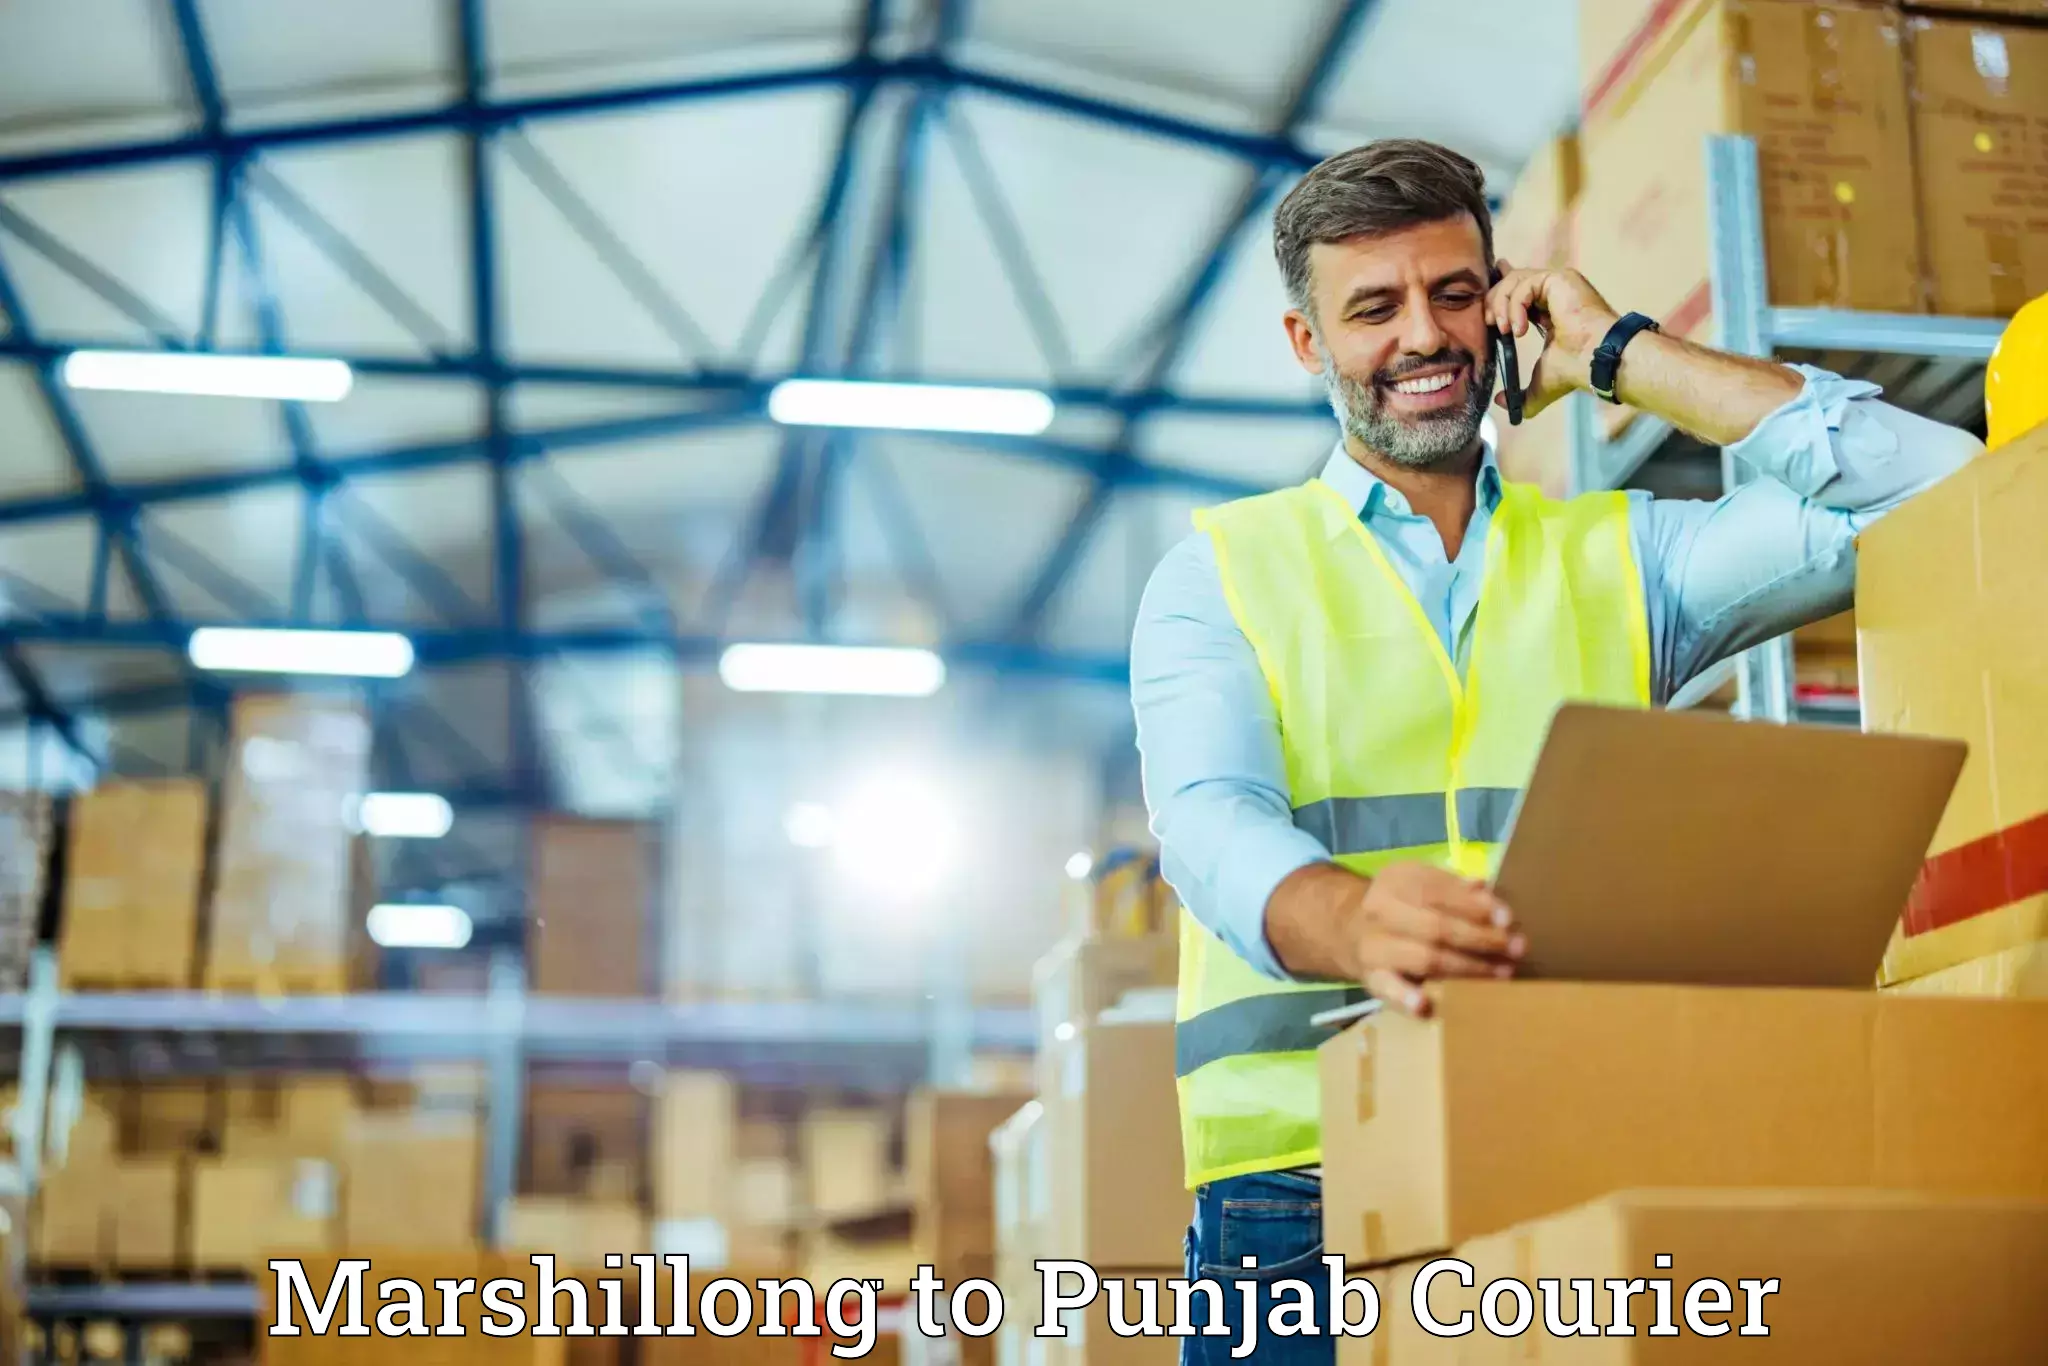 Furniture moving experts Marshillong to Punjab